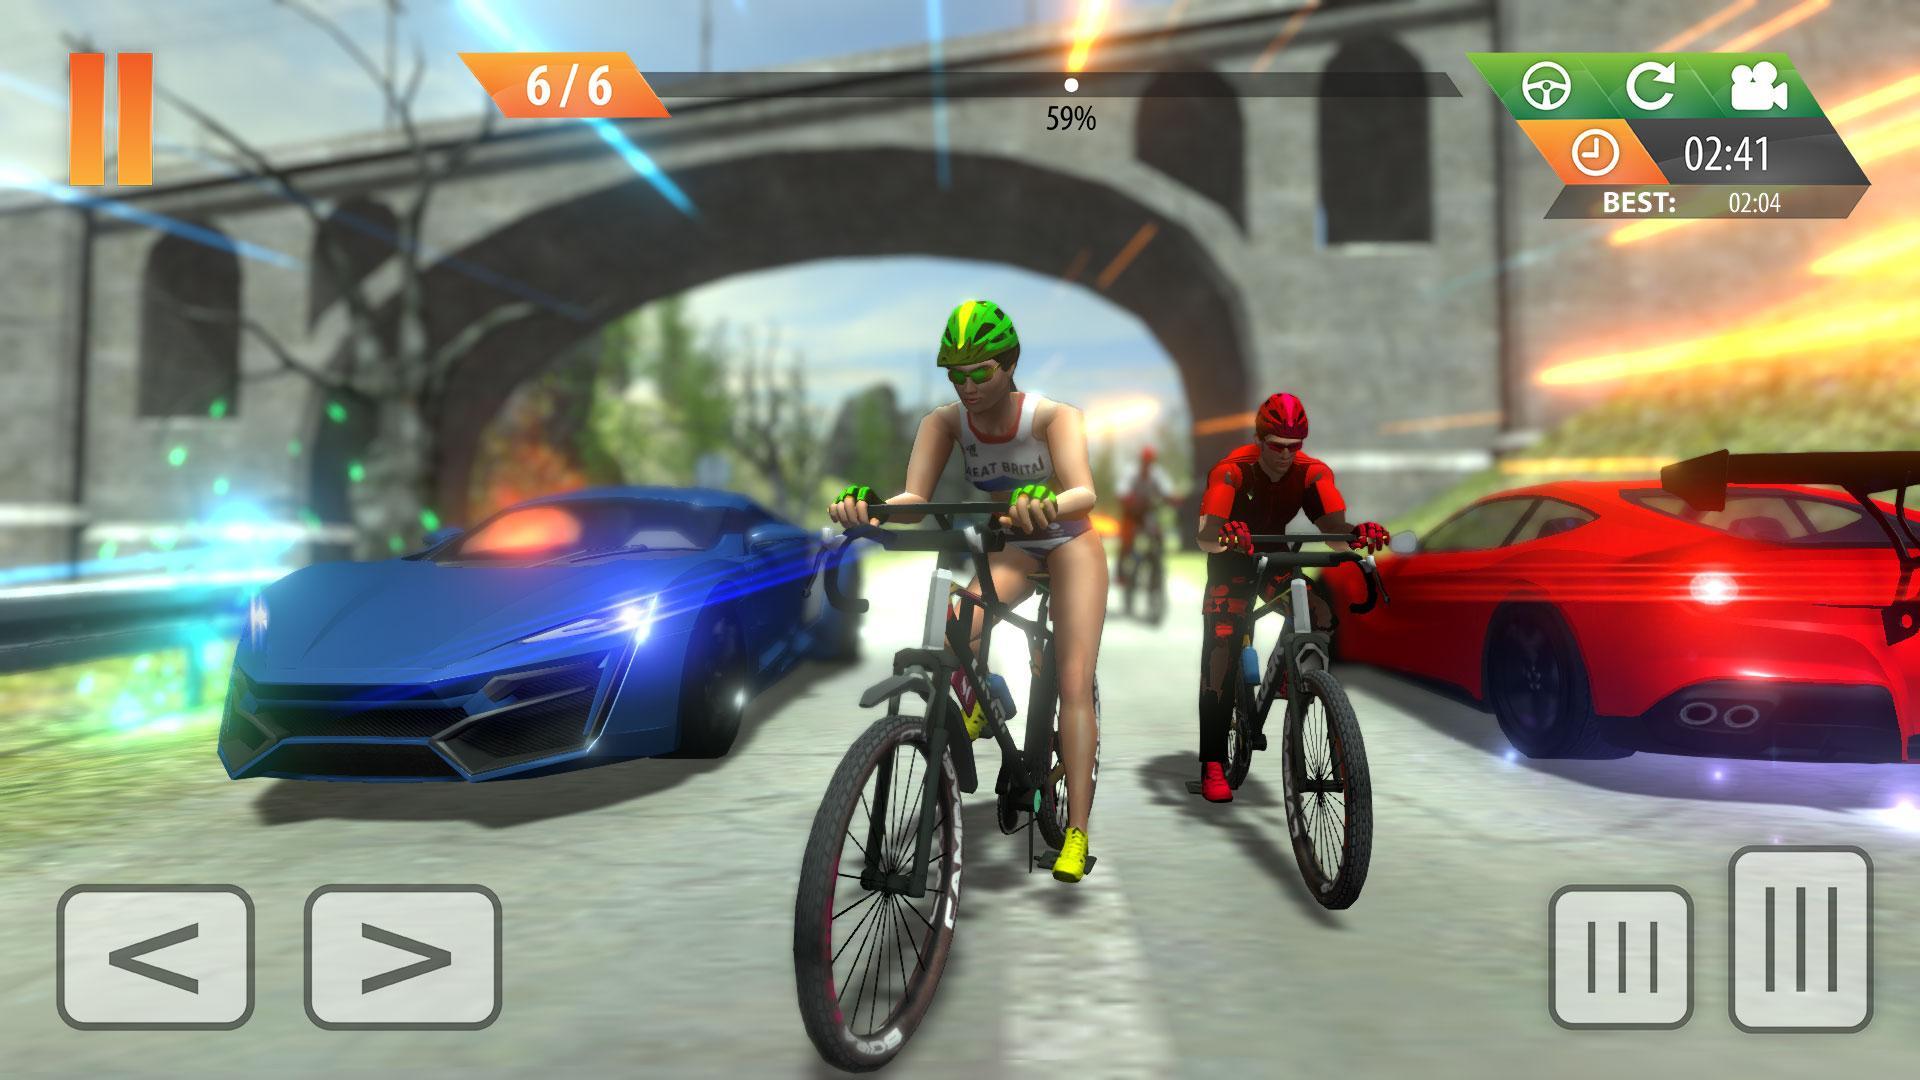 Screenshot 1 of Rider BMX senza paura: corse estreme 2019 1.1